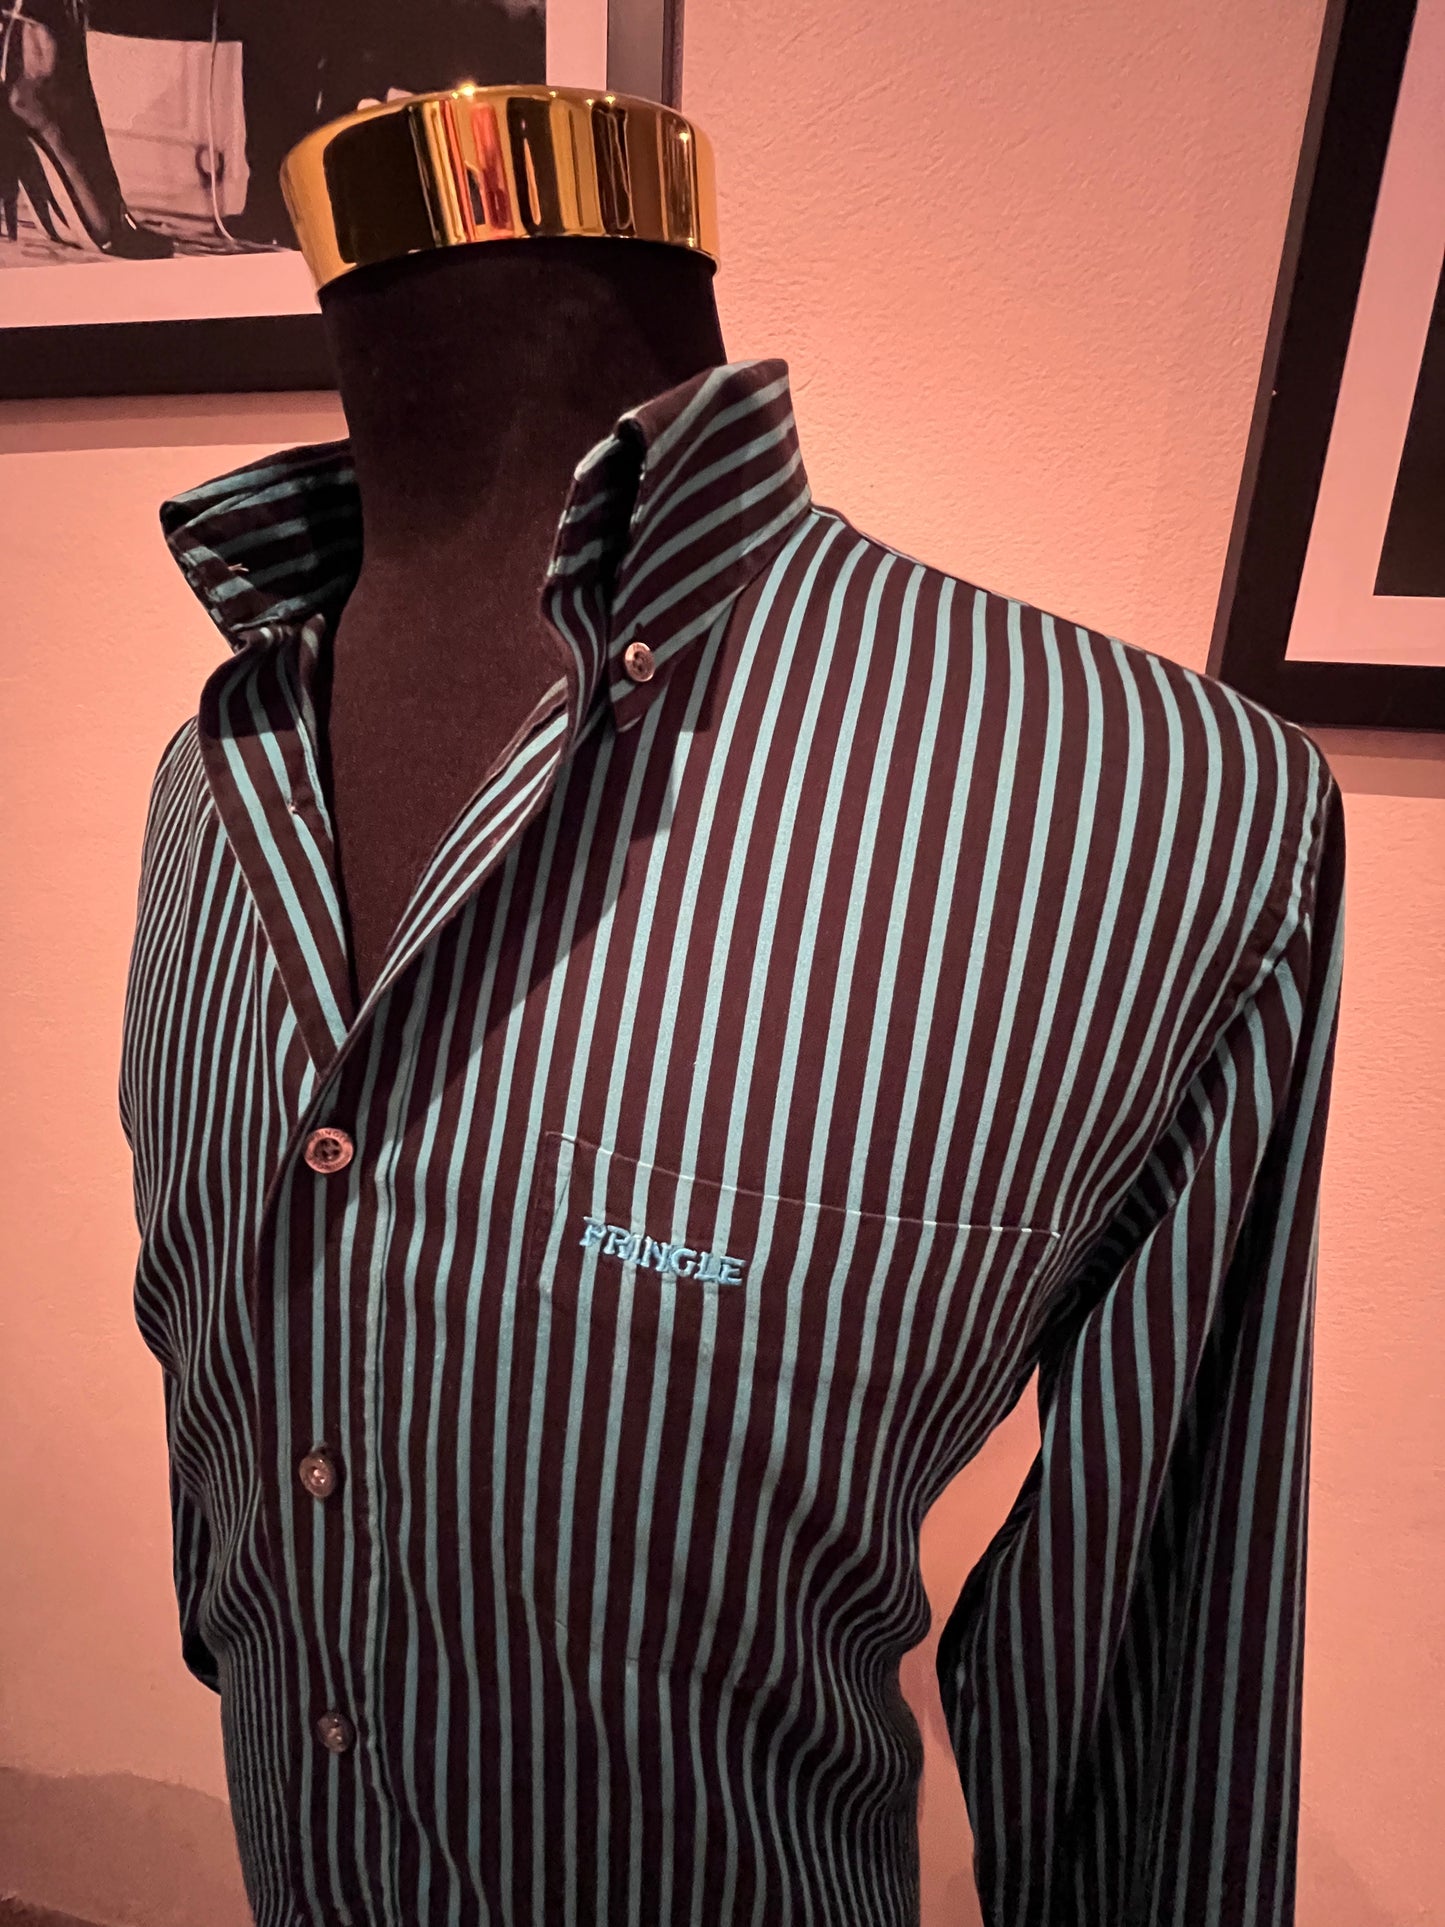 Pringle of Scotland 100% Blue Black Stripe Cotton Shirt Size Large Button Down Collar